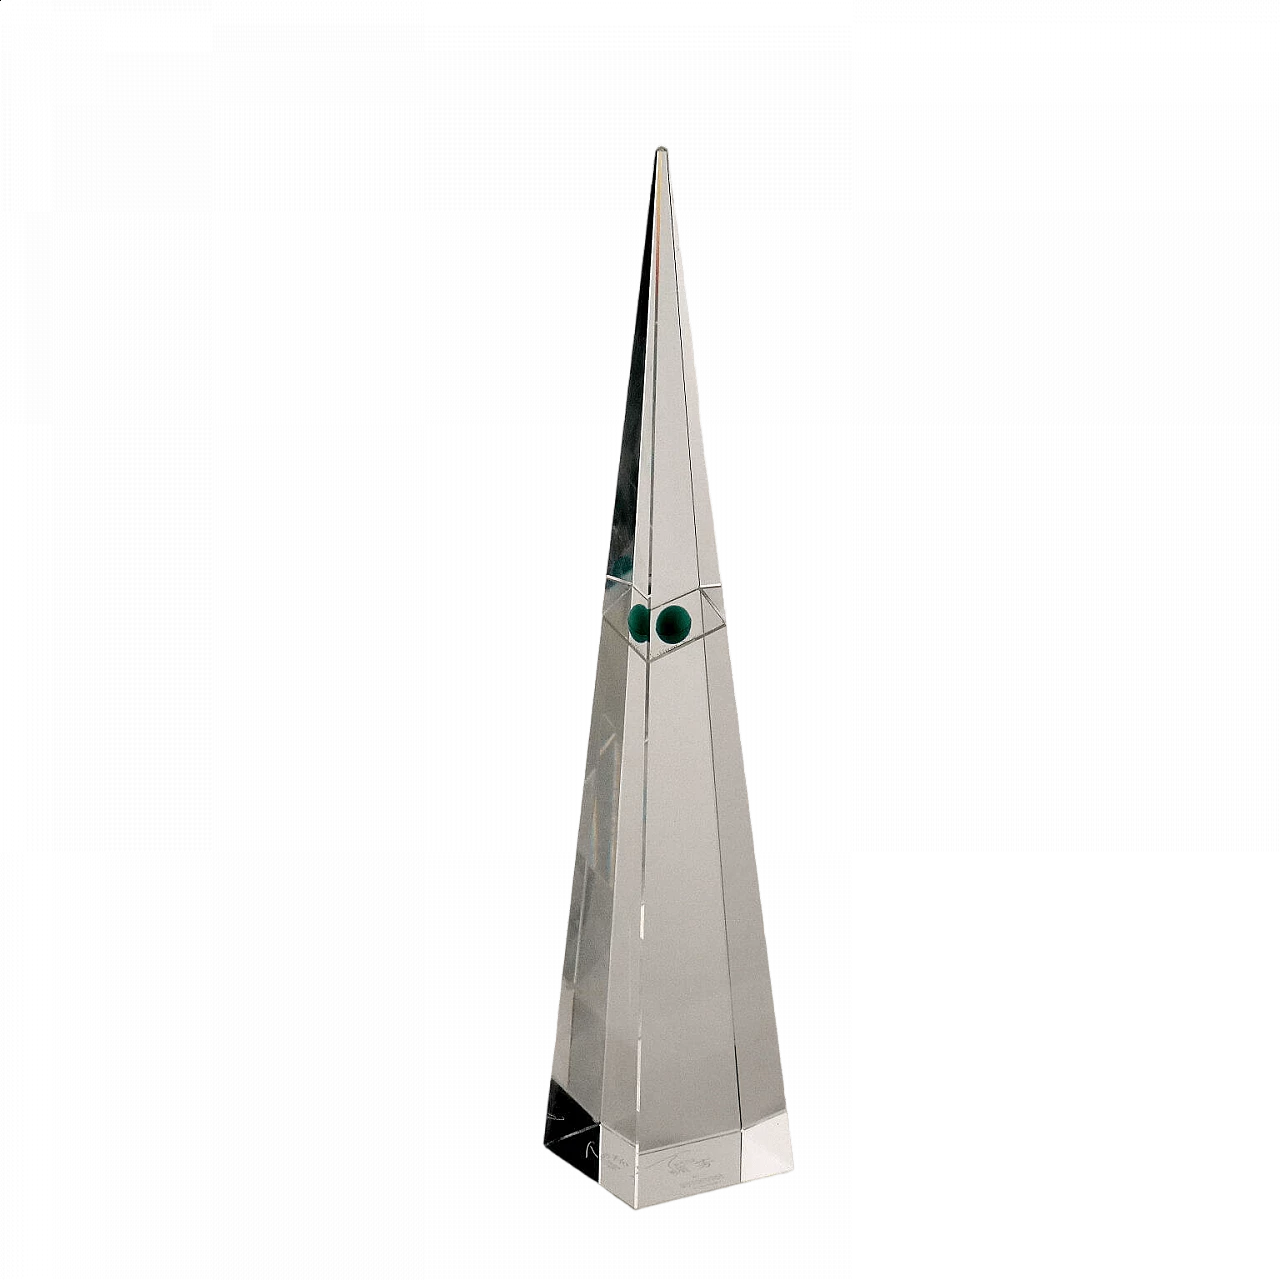 Obelisco in cristallo torre di Hong Kong di Tsang per Swarowski selection, 1997 10